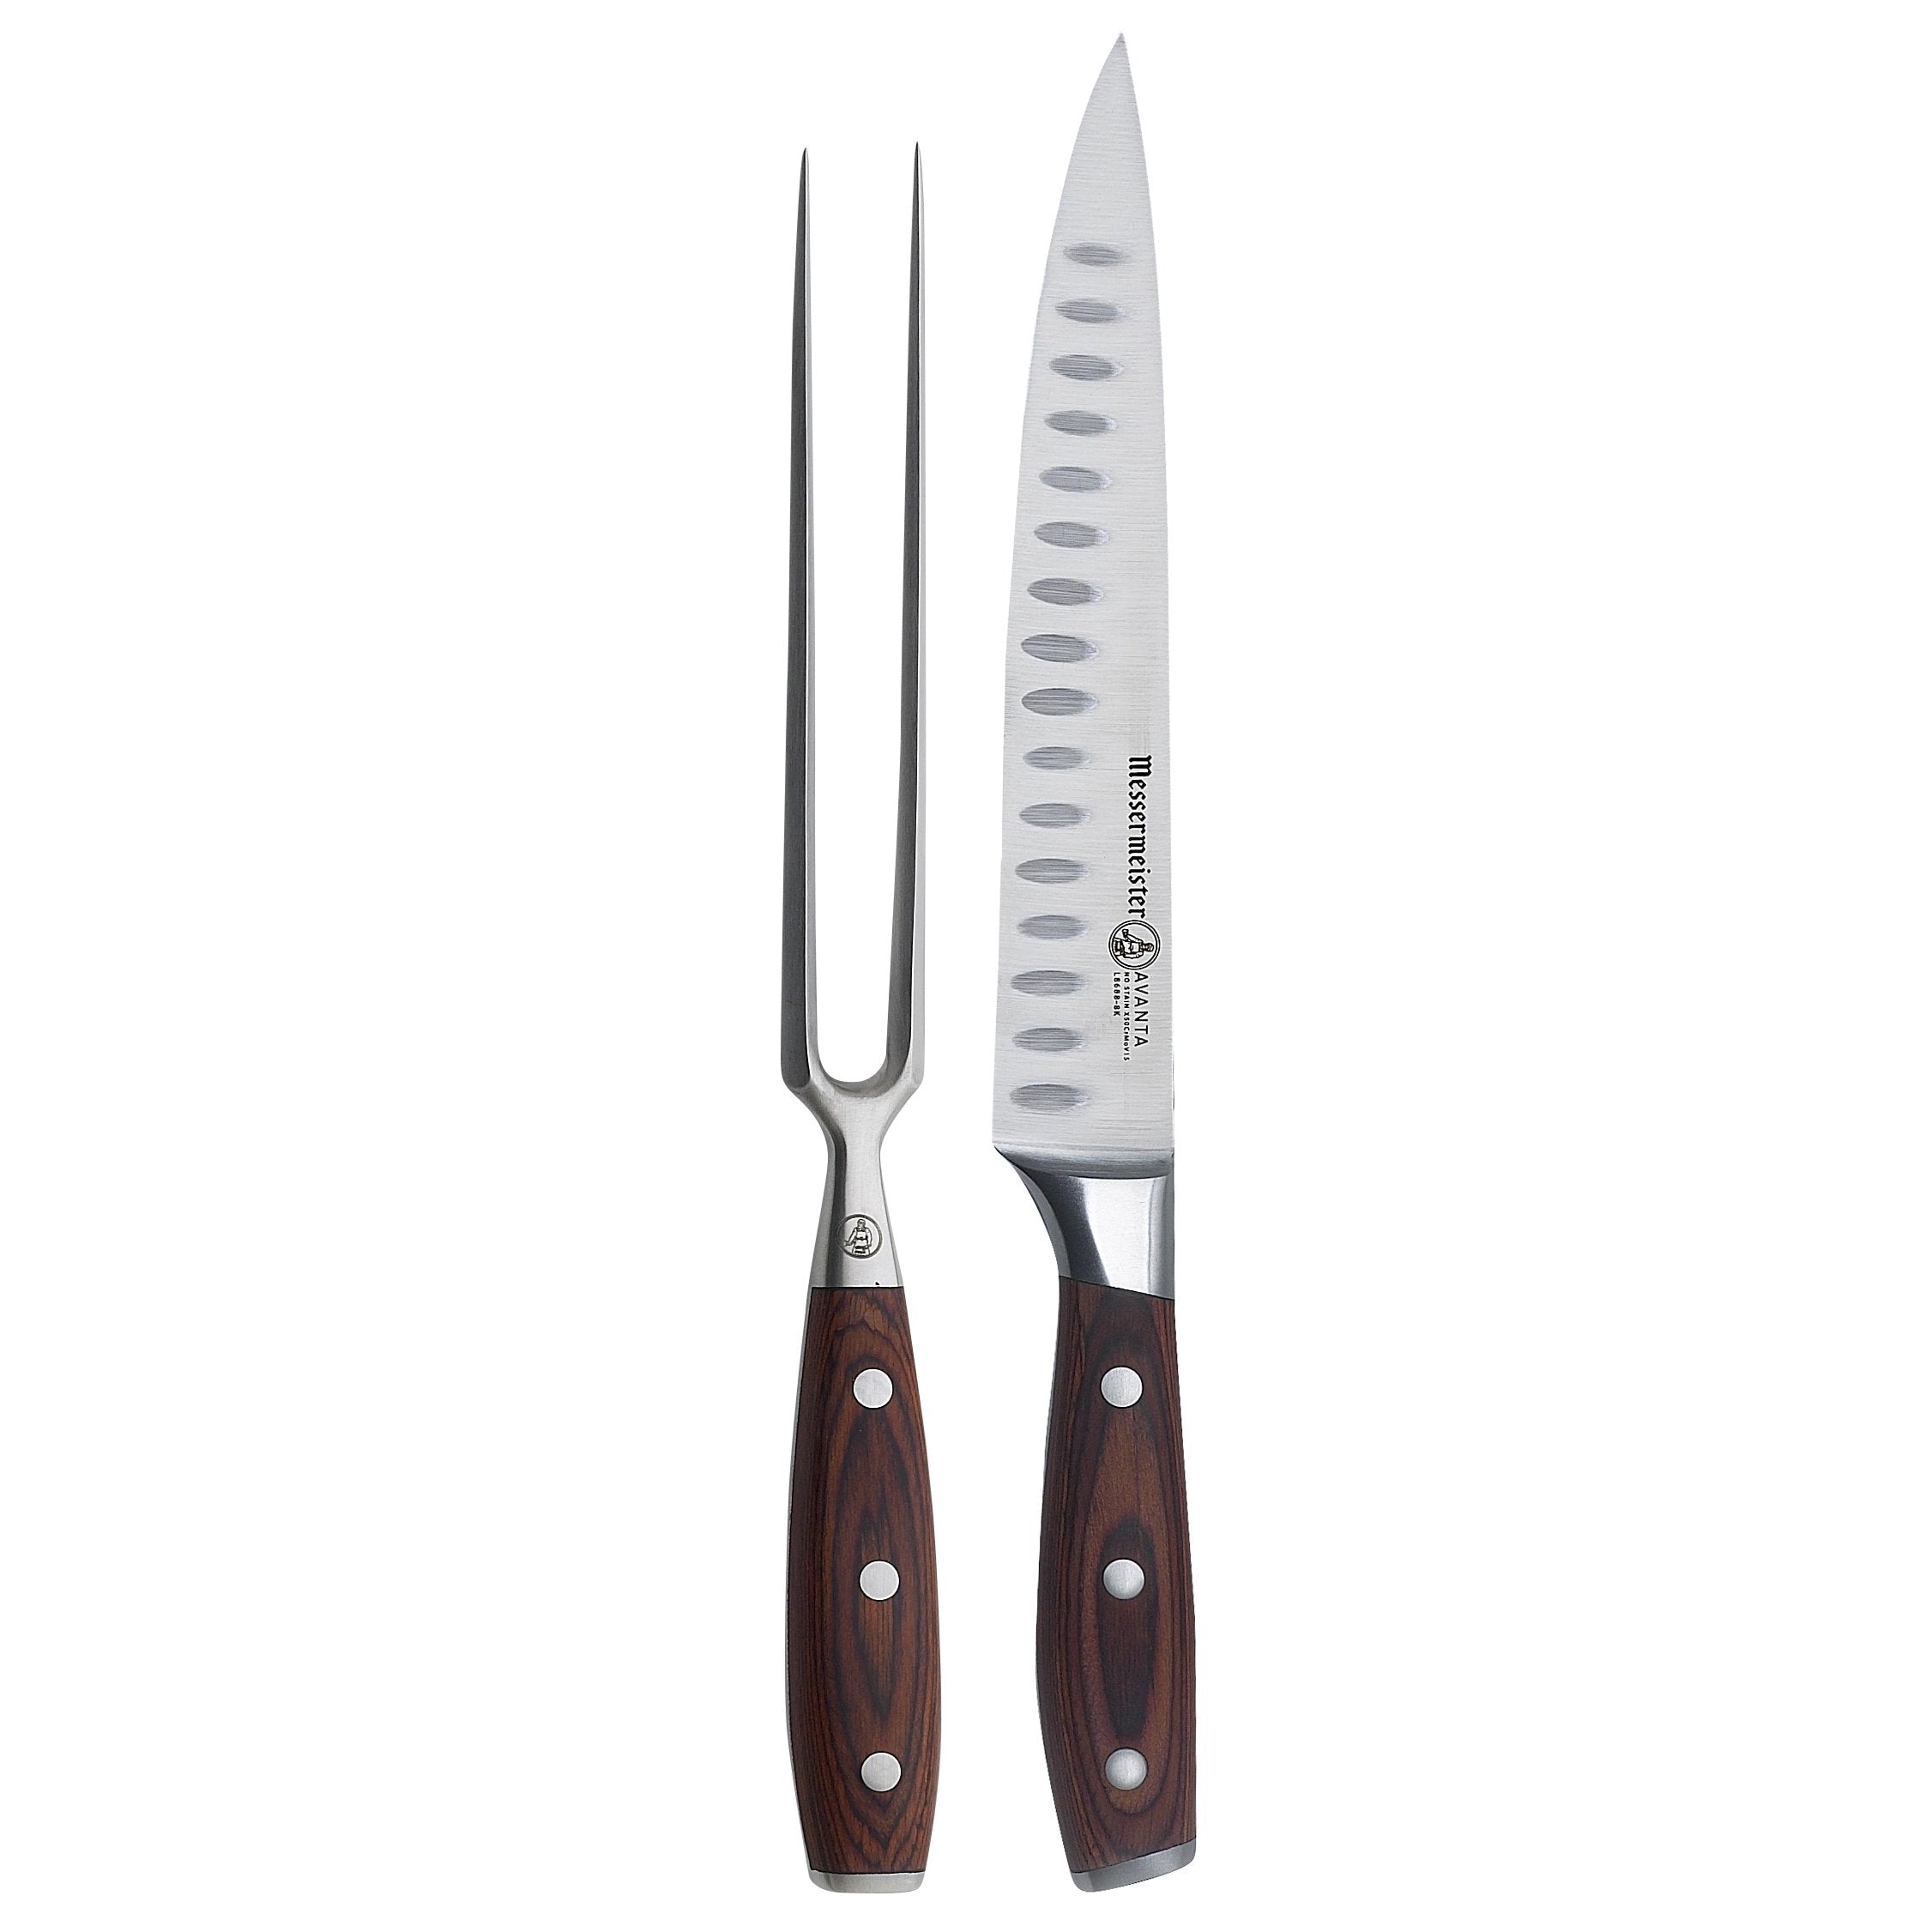 Messermeister Avanta Stainless Steel Fine Edge Steak Knife Set, 4